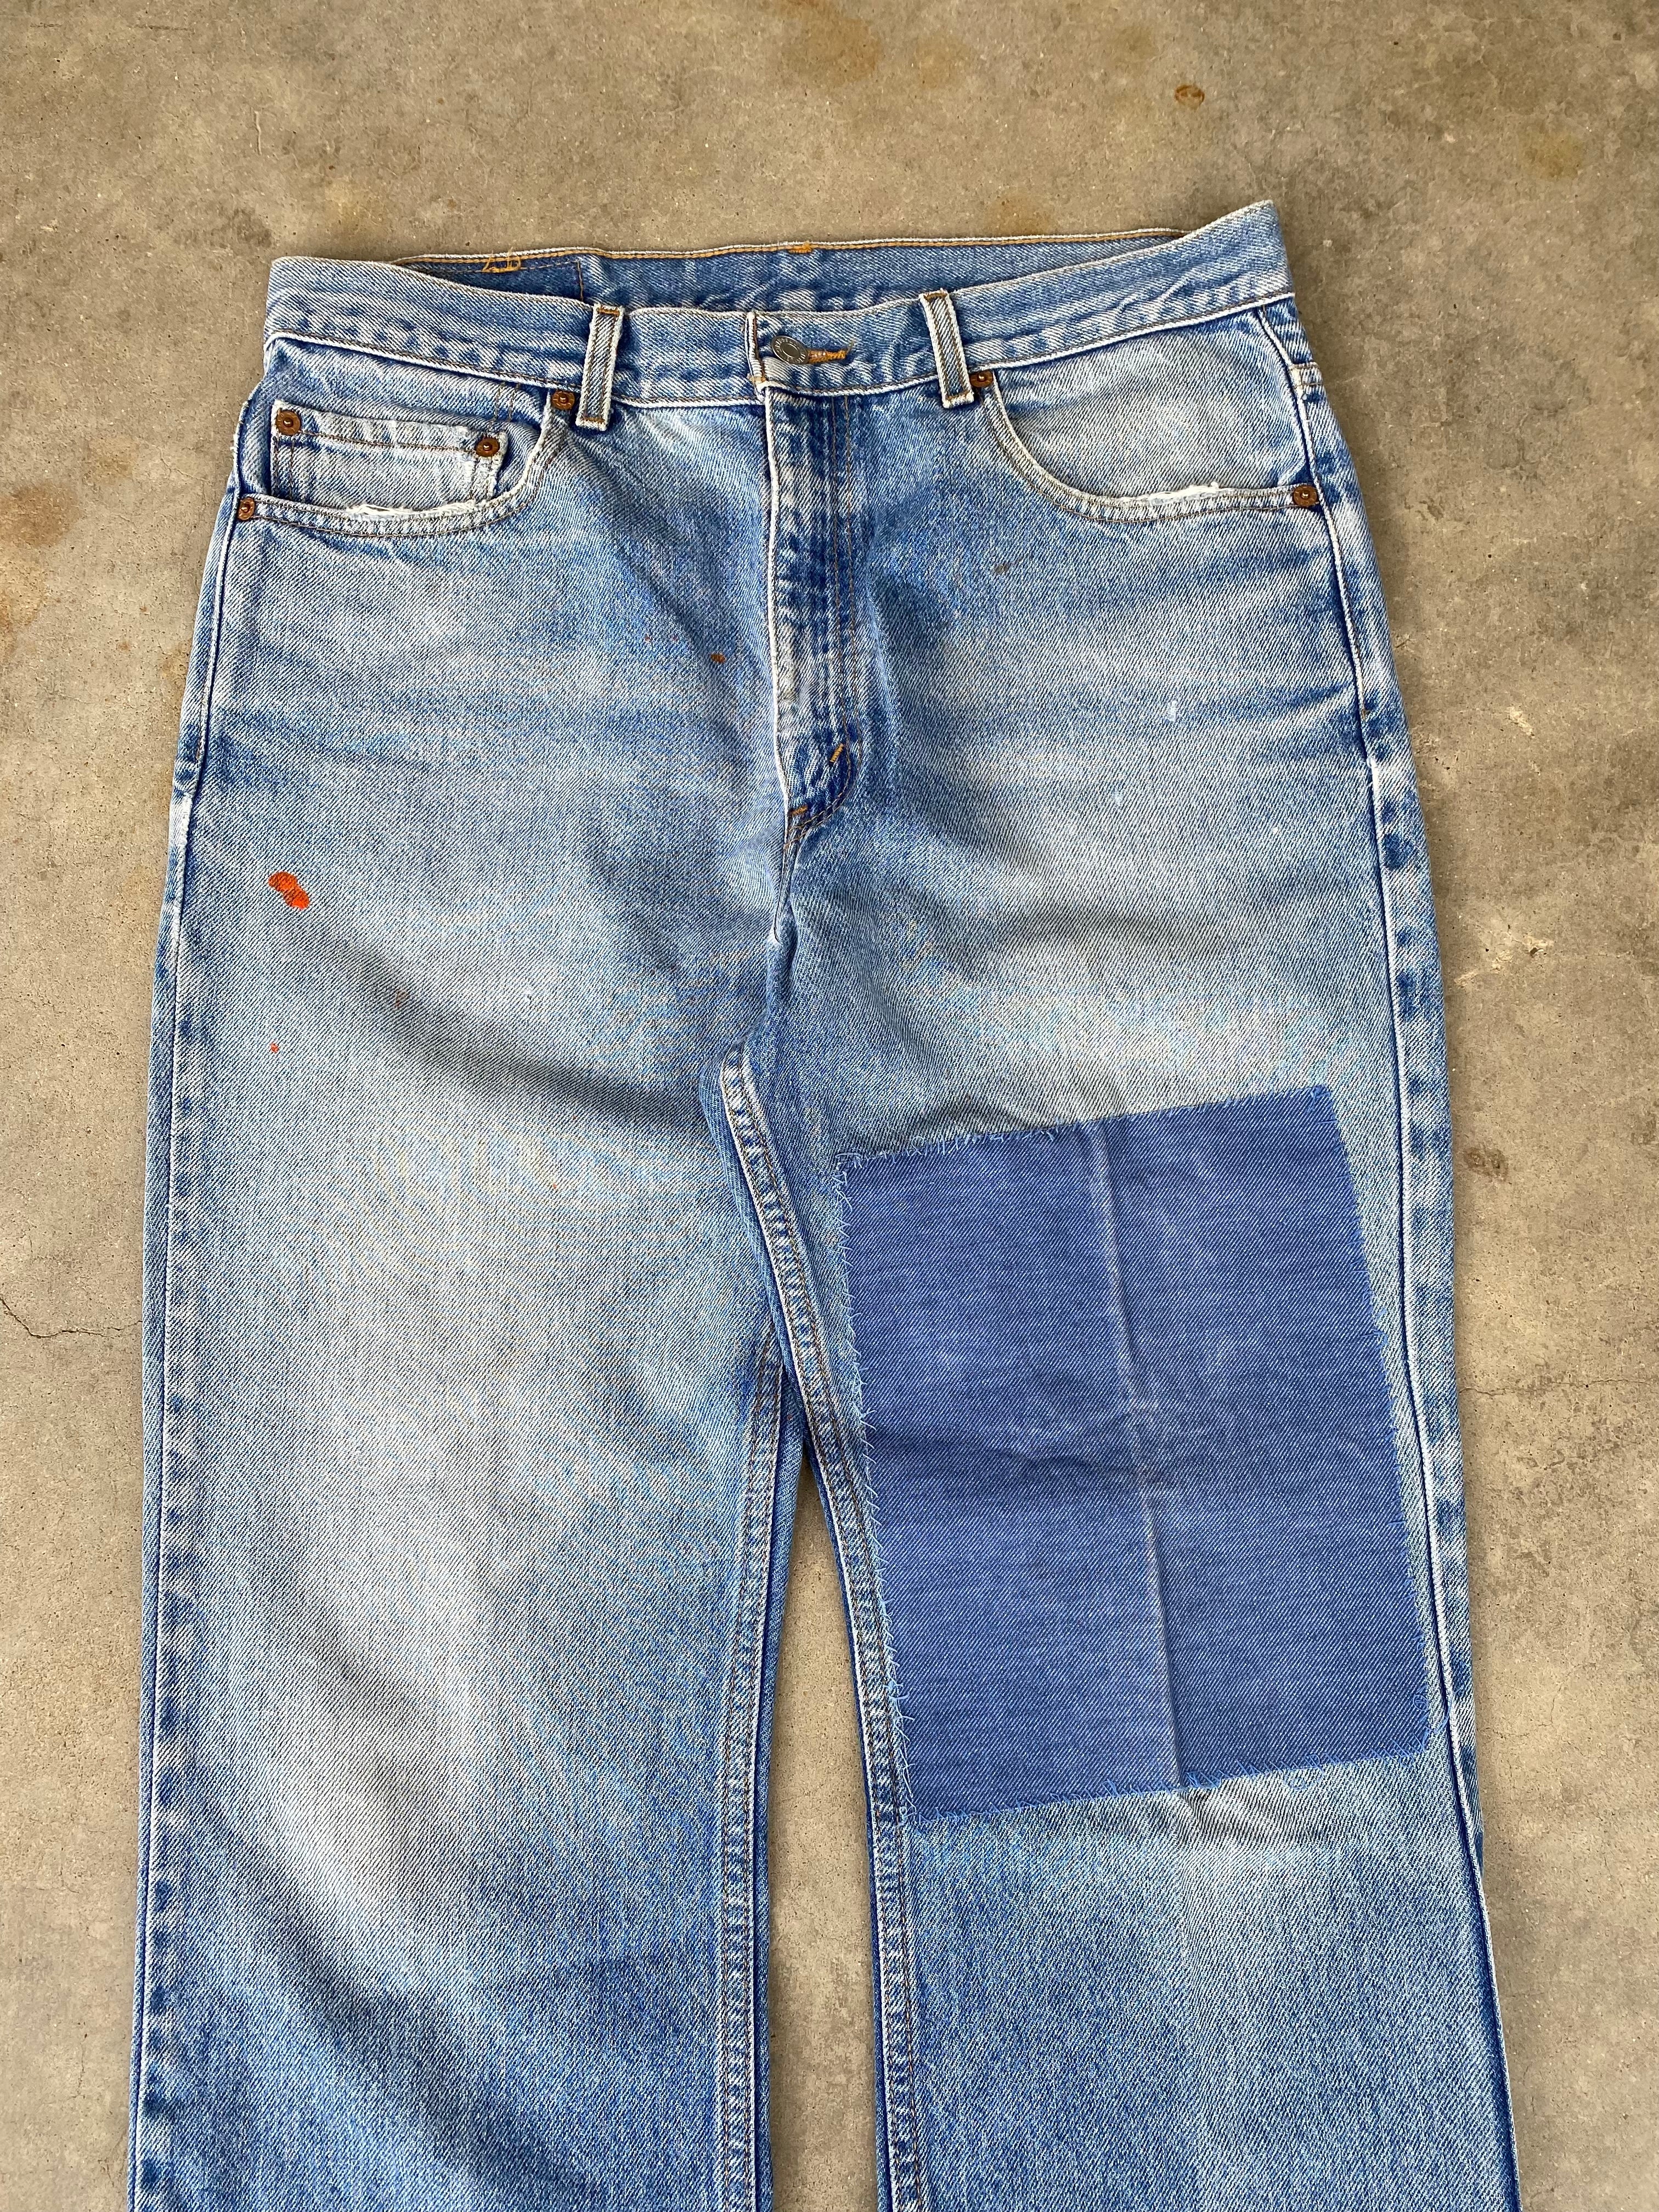 2000 Levi's 517 Patched Jeans (34"x28")